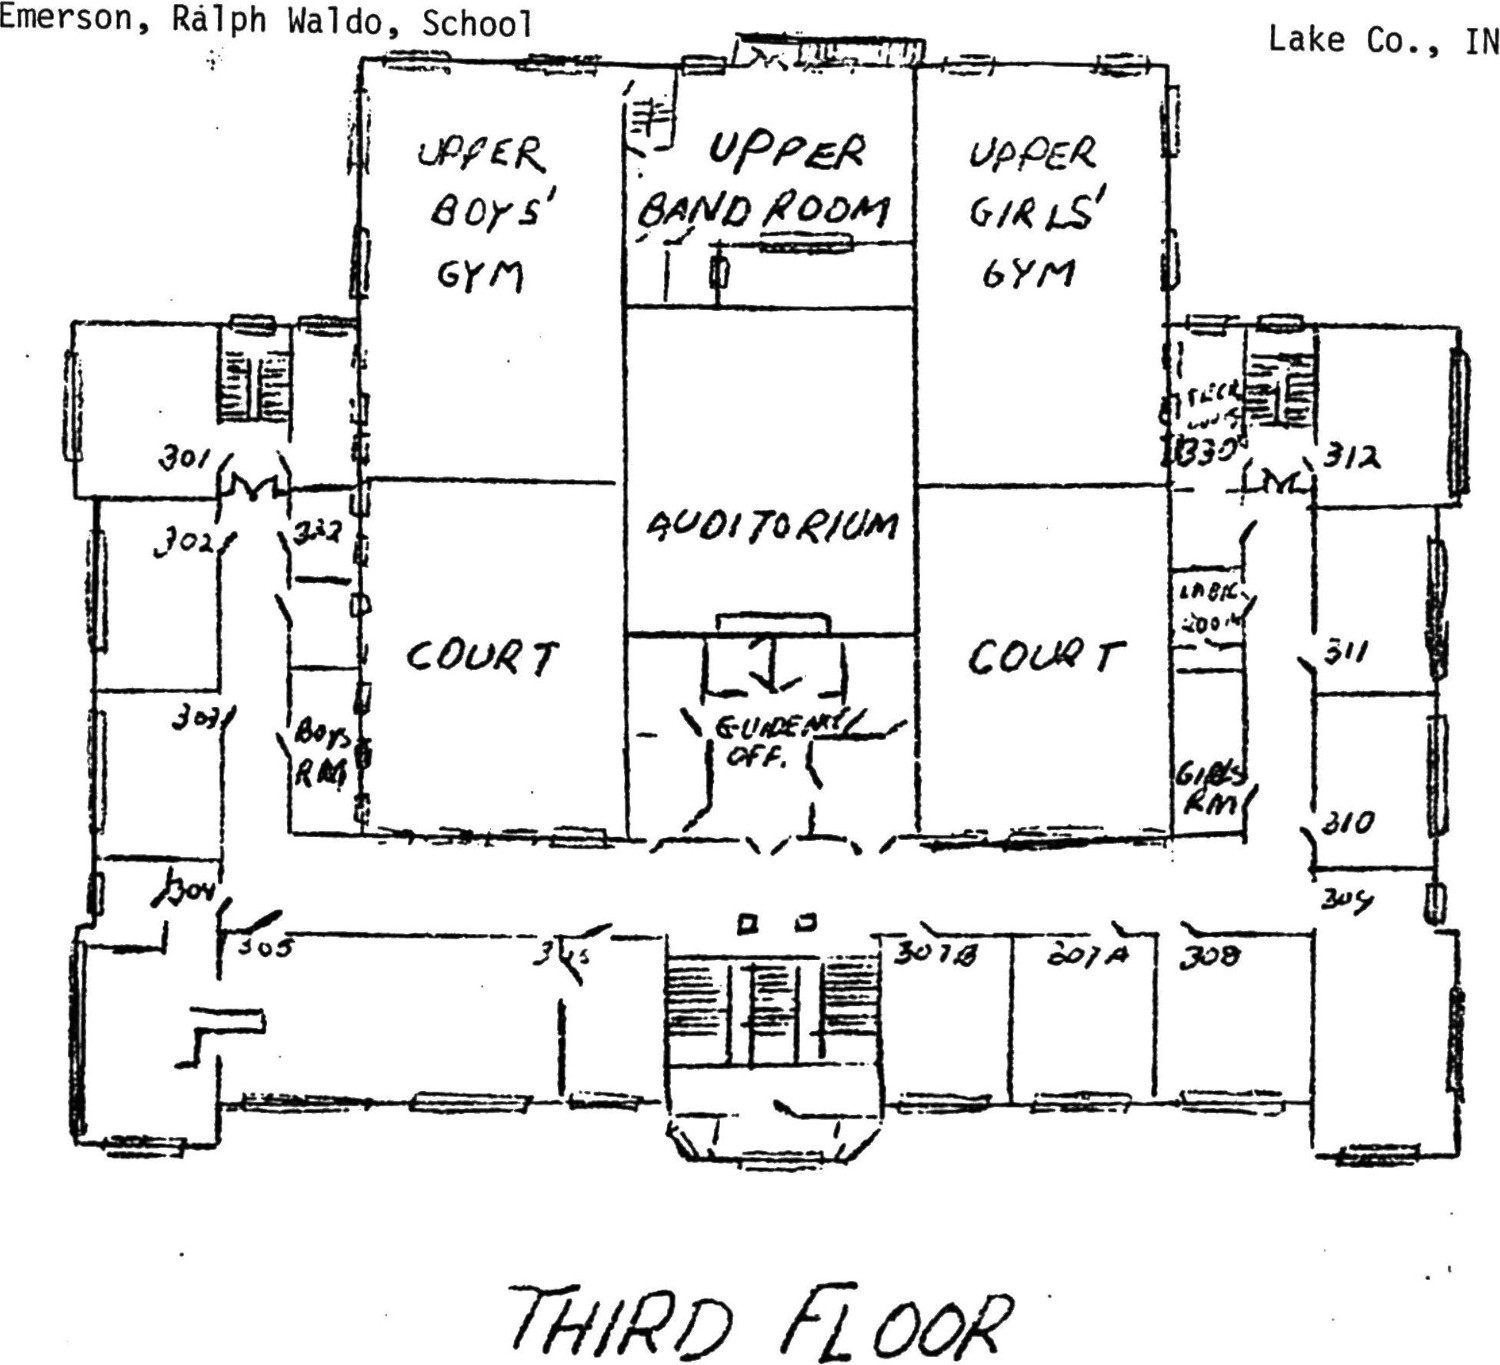 Ralph Waldo Emerson School, Gary Indiana Third Floor Plan